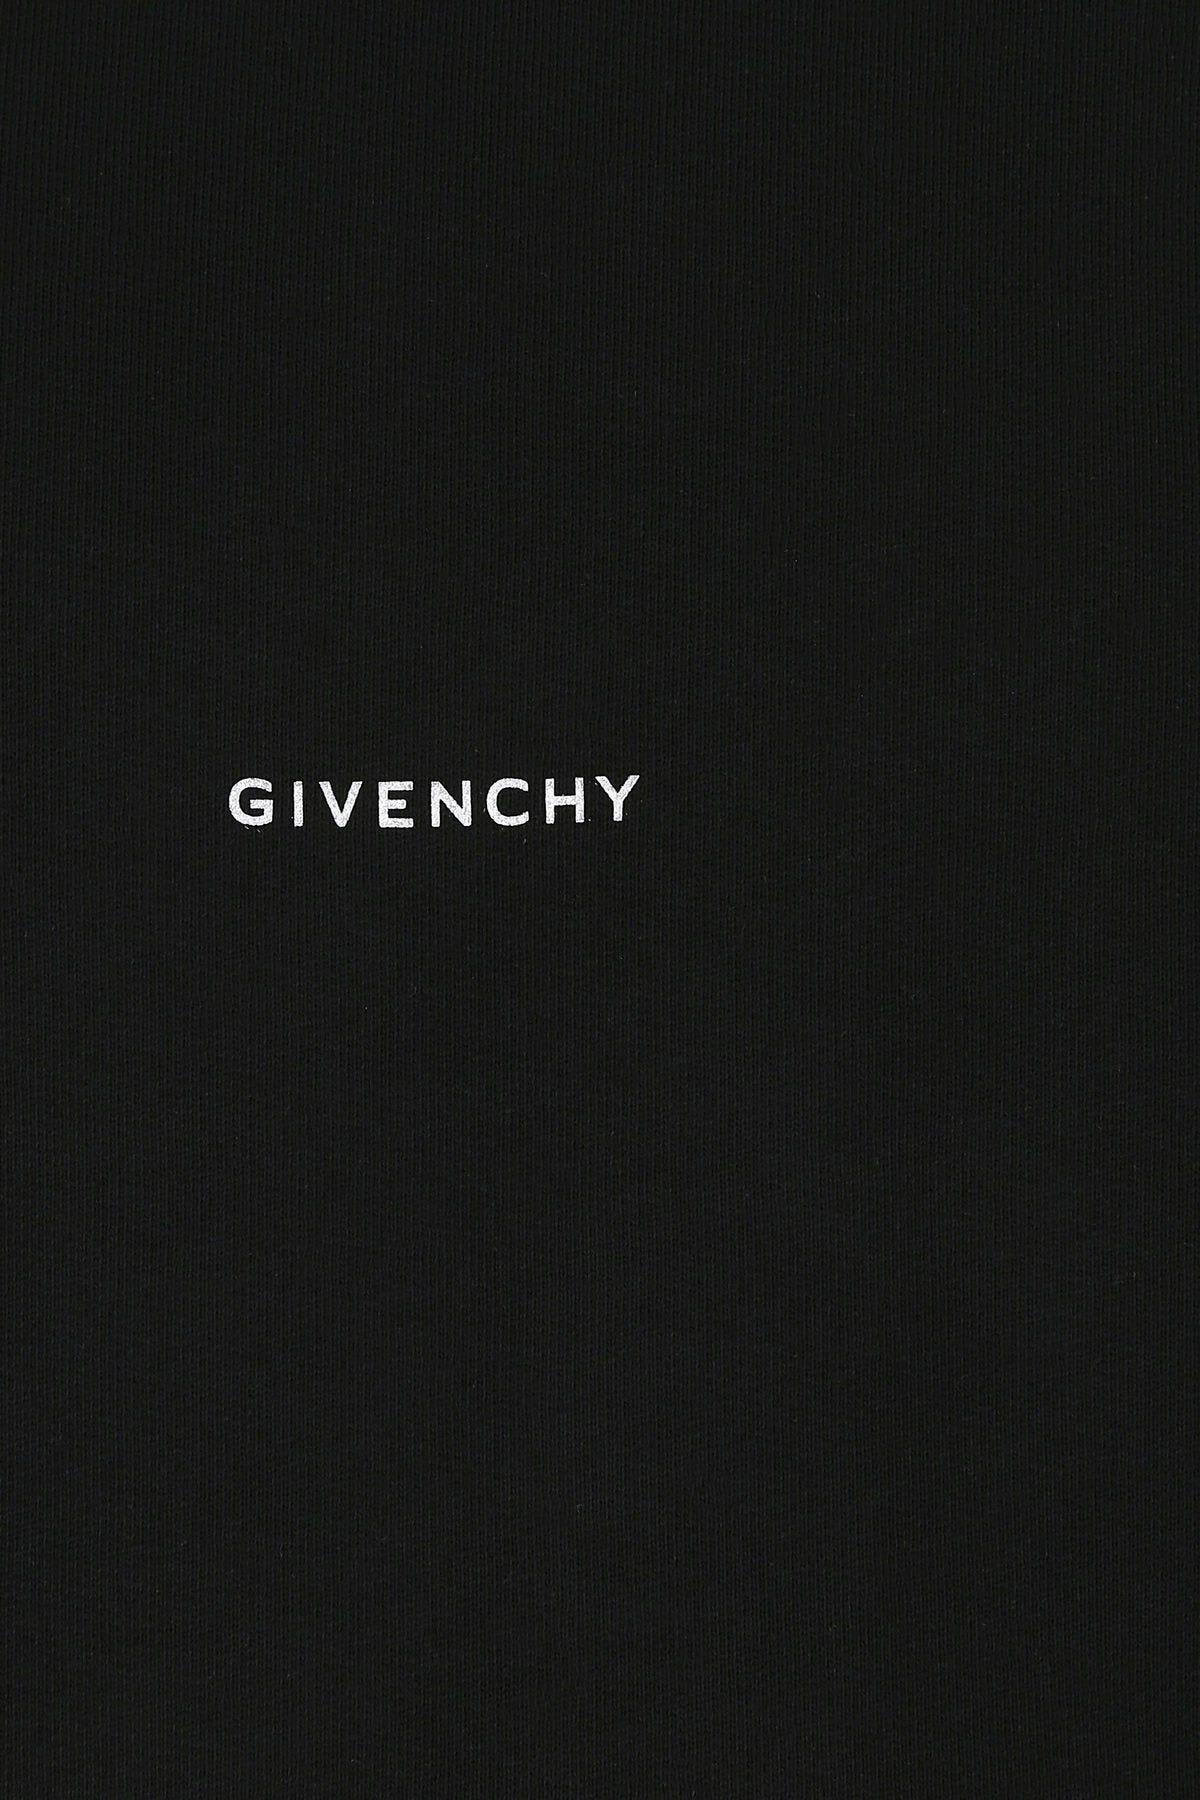 Shop Givenchy Black Cotton Sweatshirt